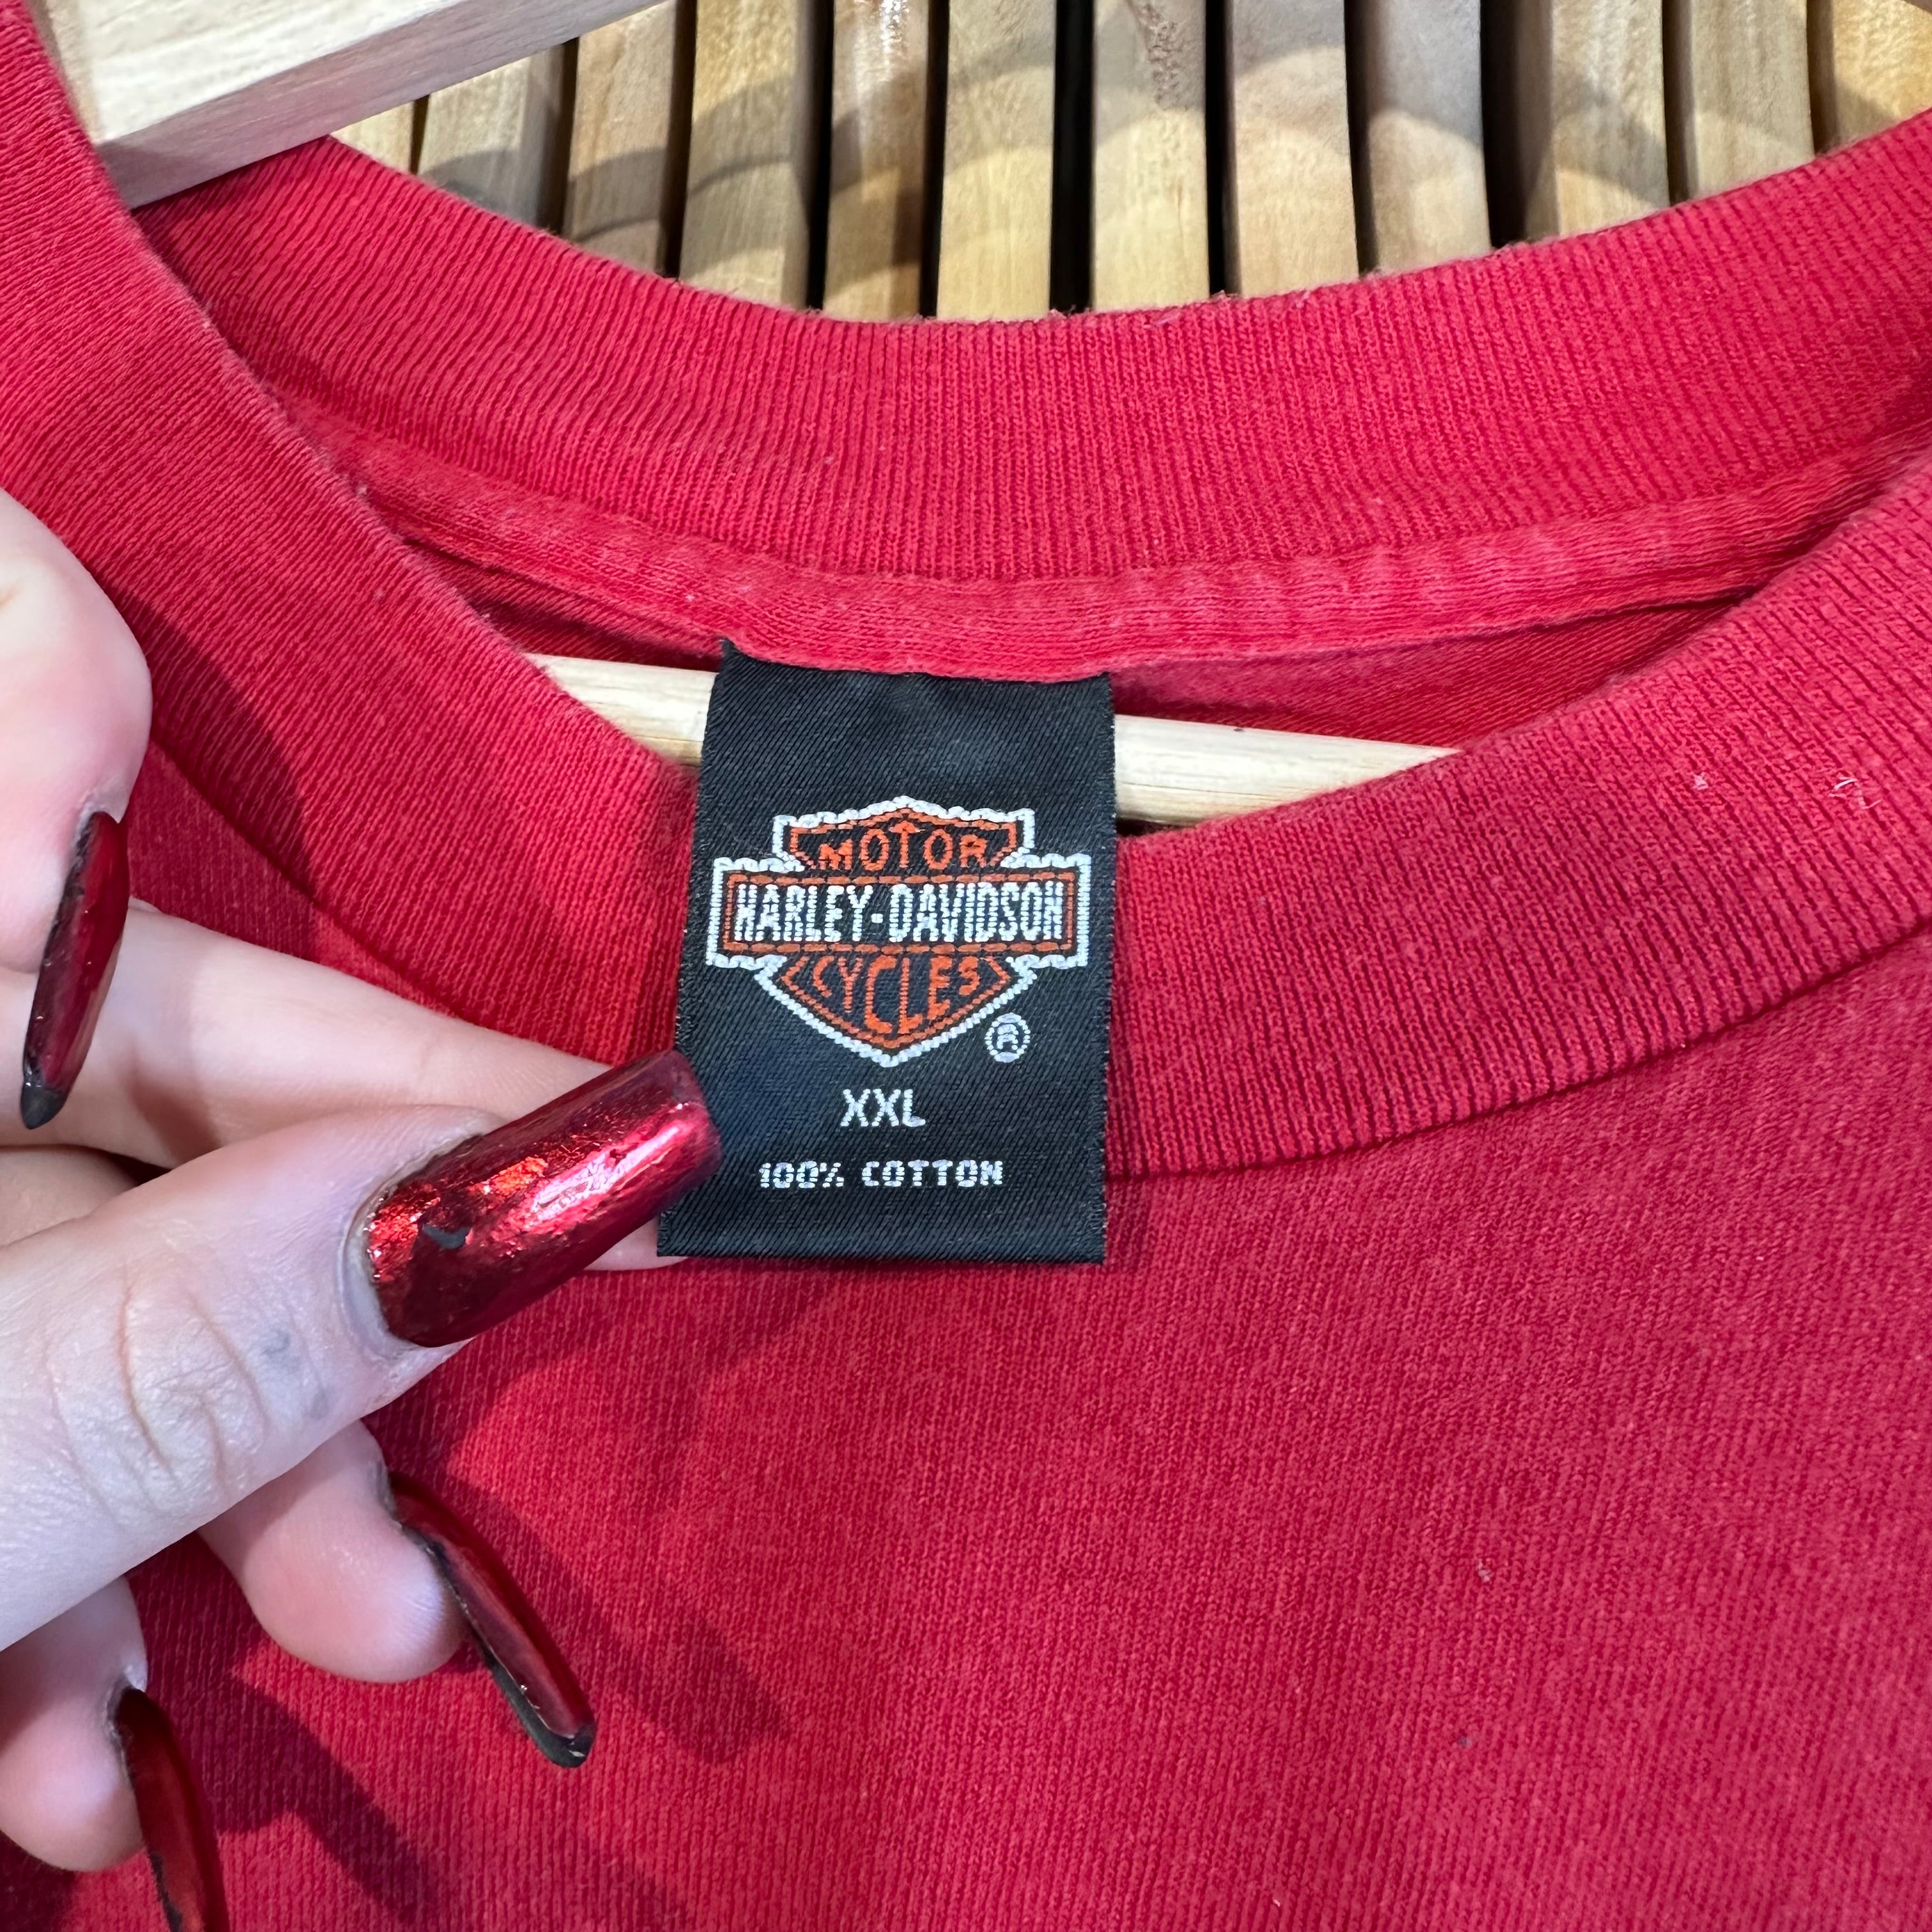 Harley Davidson American Pride/Ride Red T-Shirt